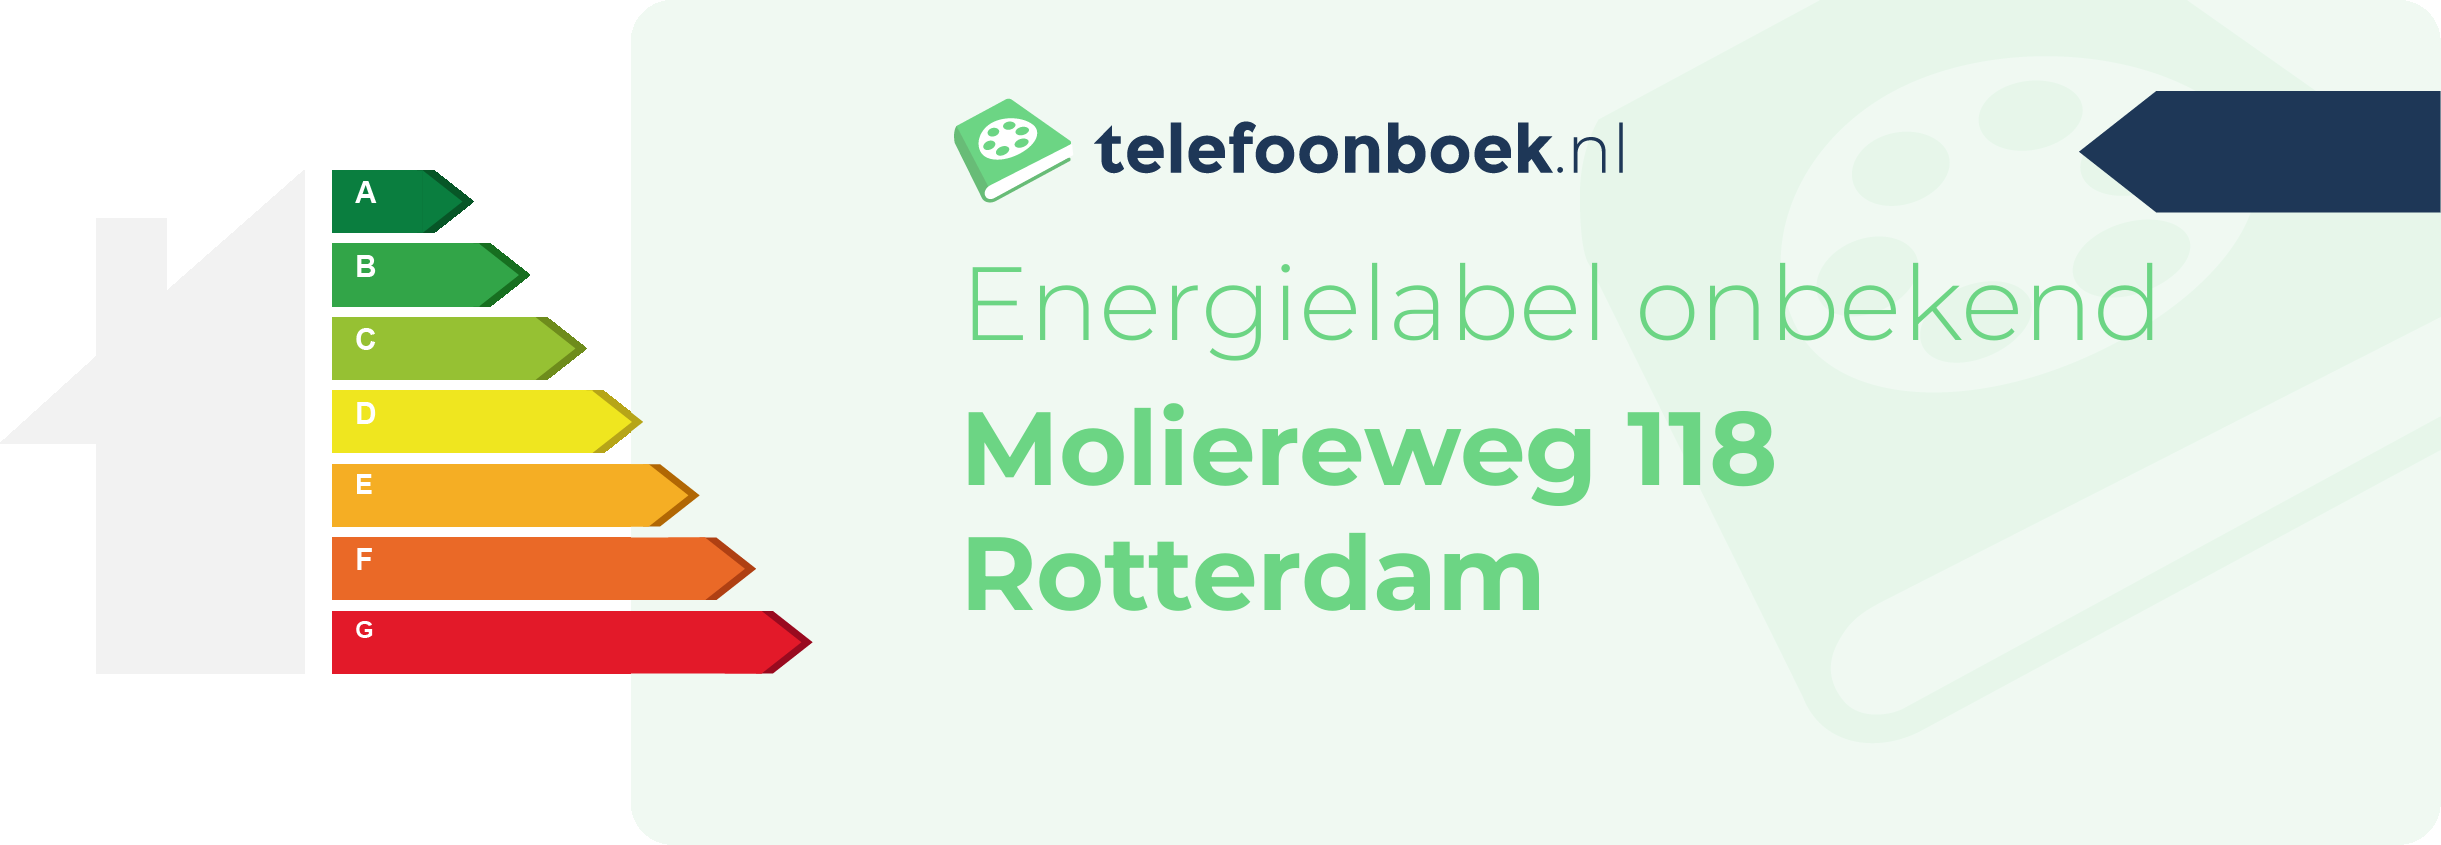 Energielabel Moliereweg 118 Rotterdam